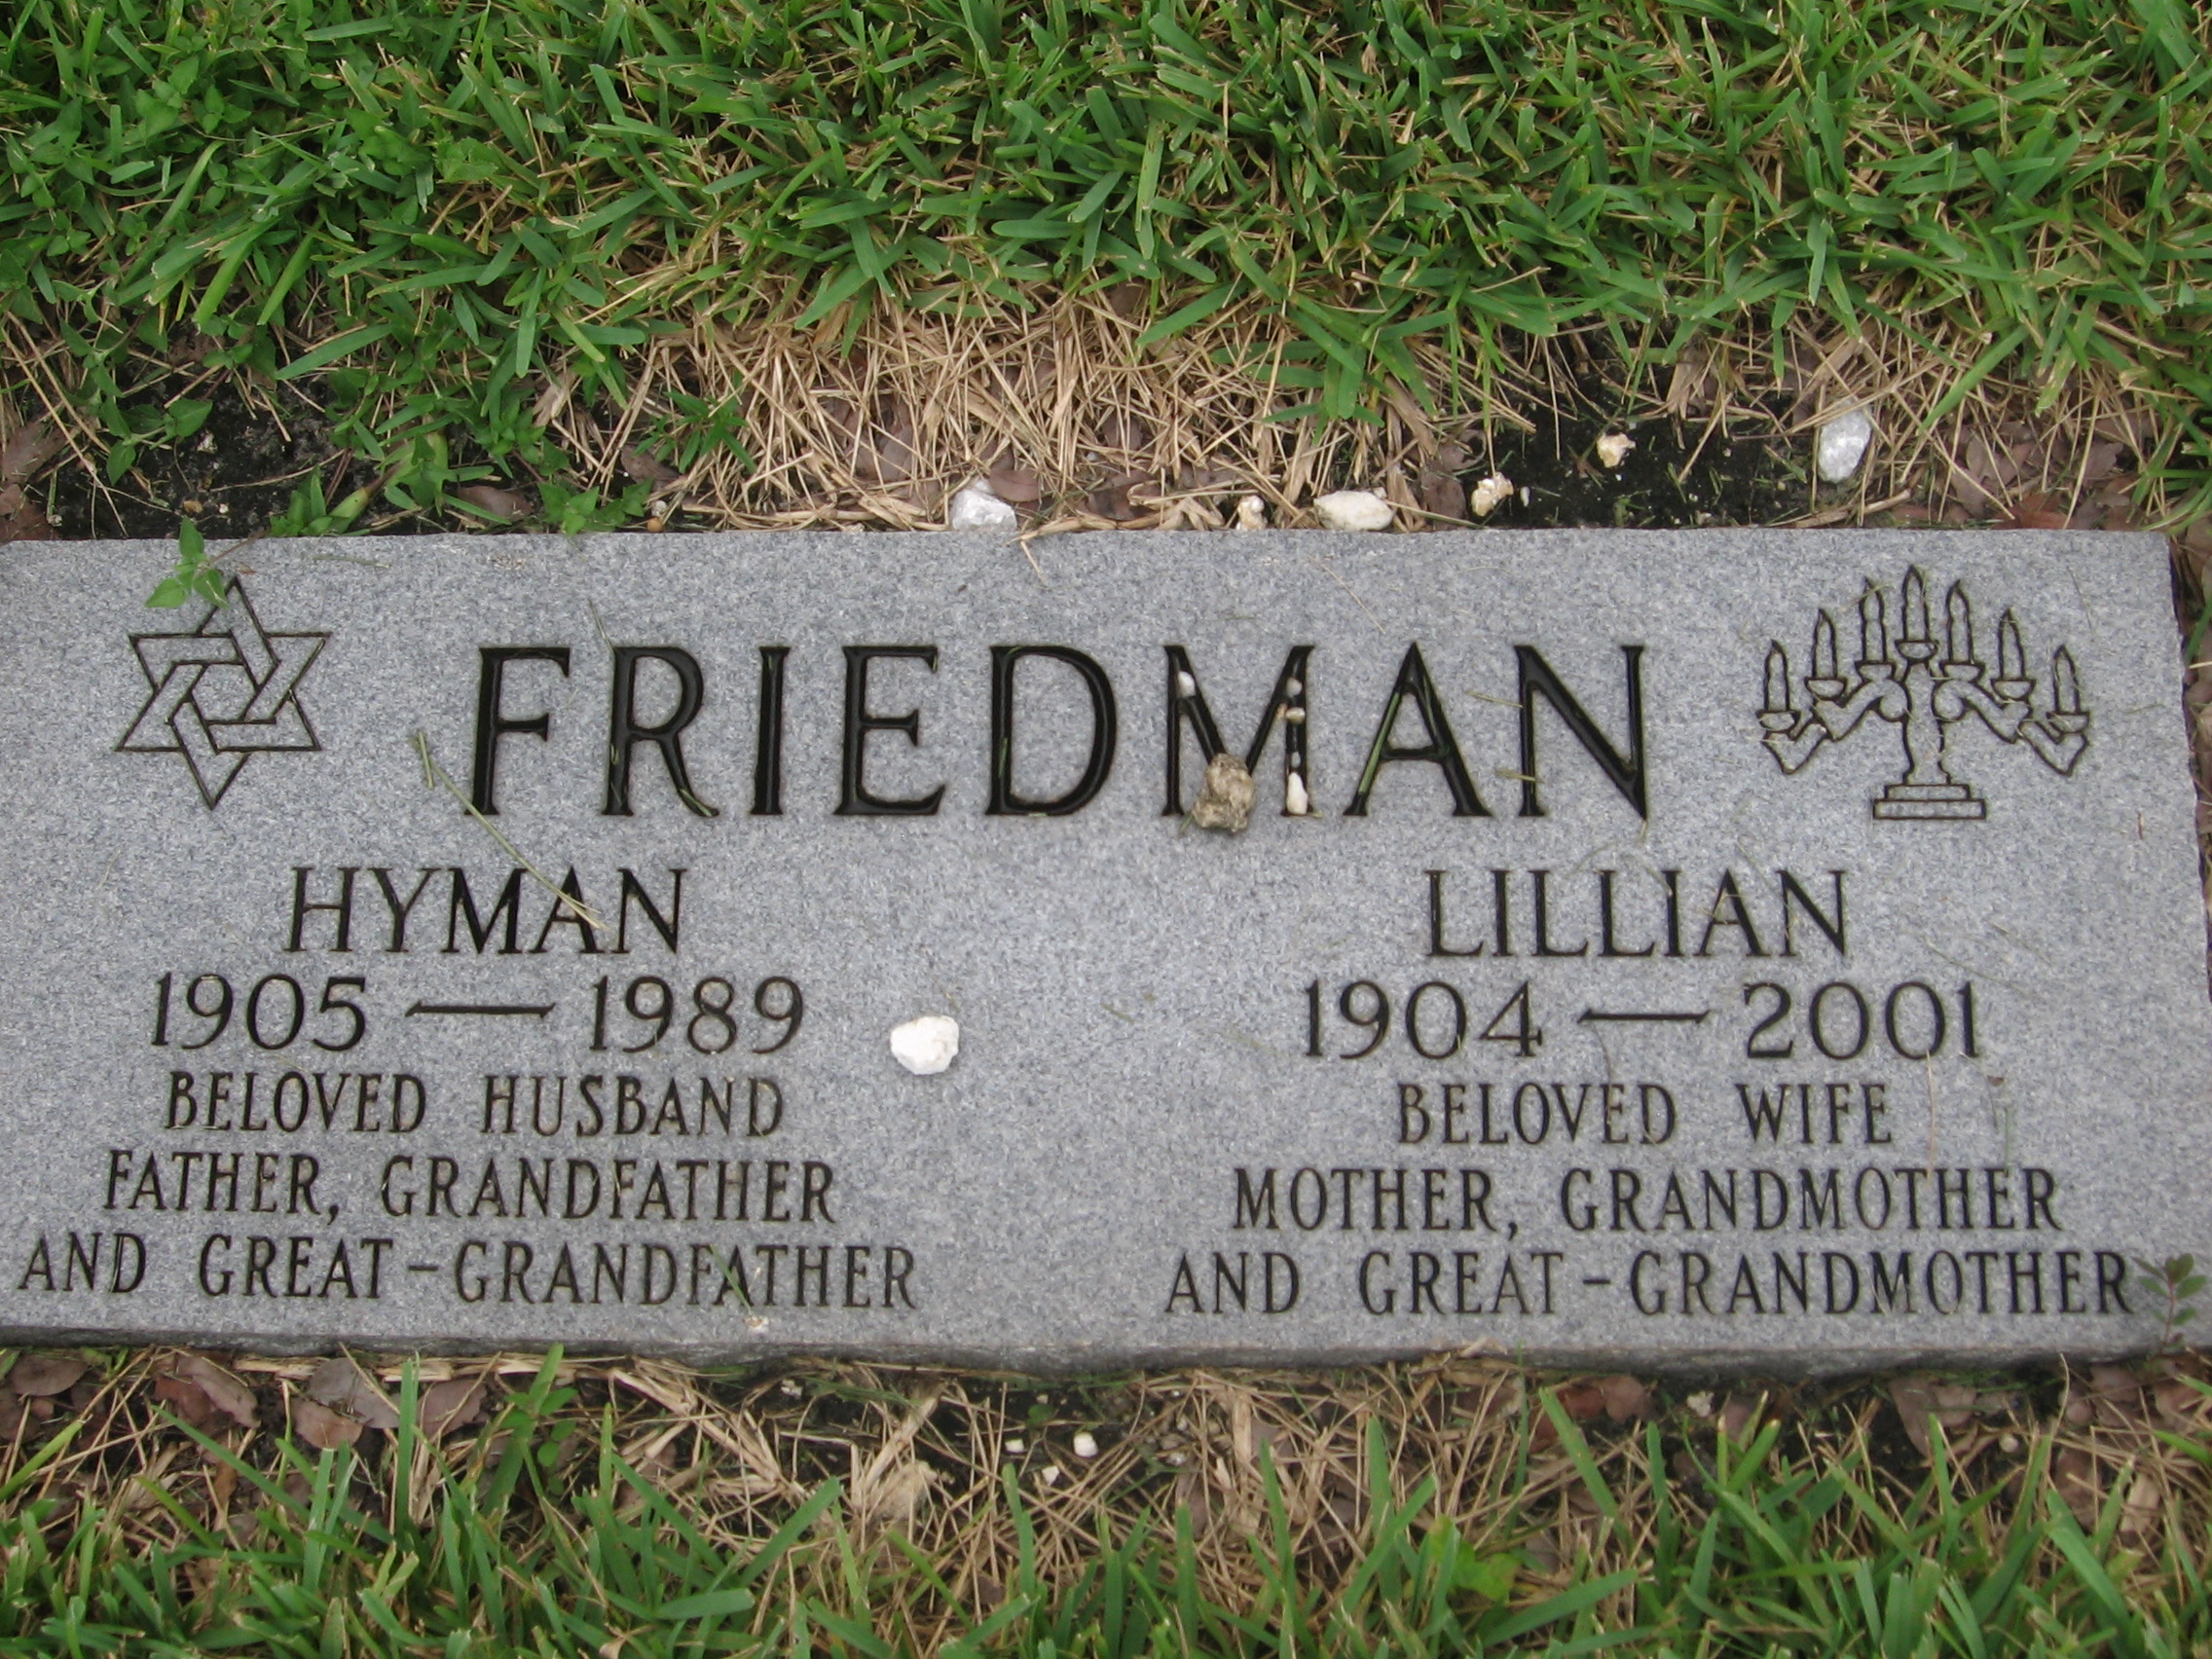 Lillian Friedman